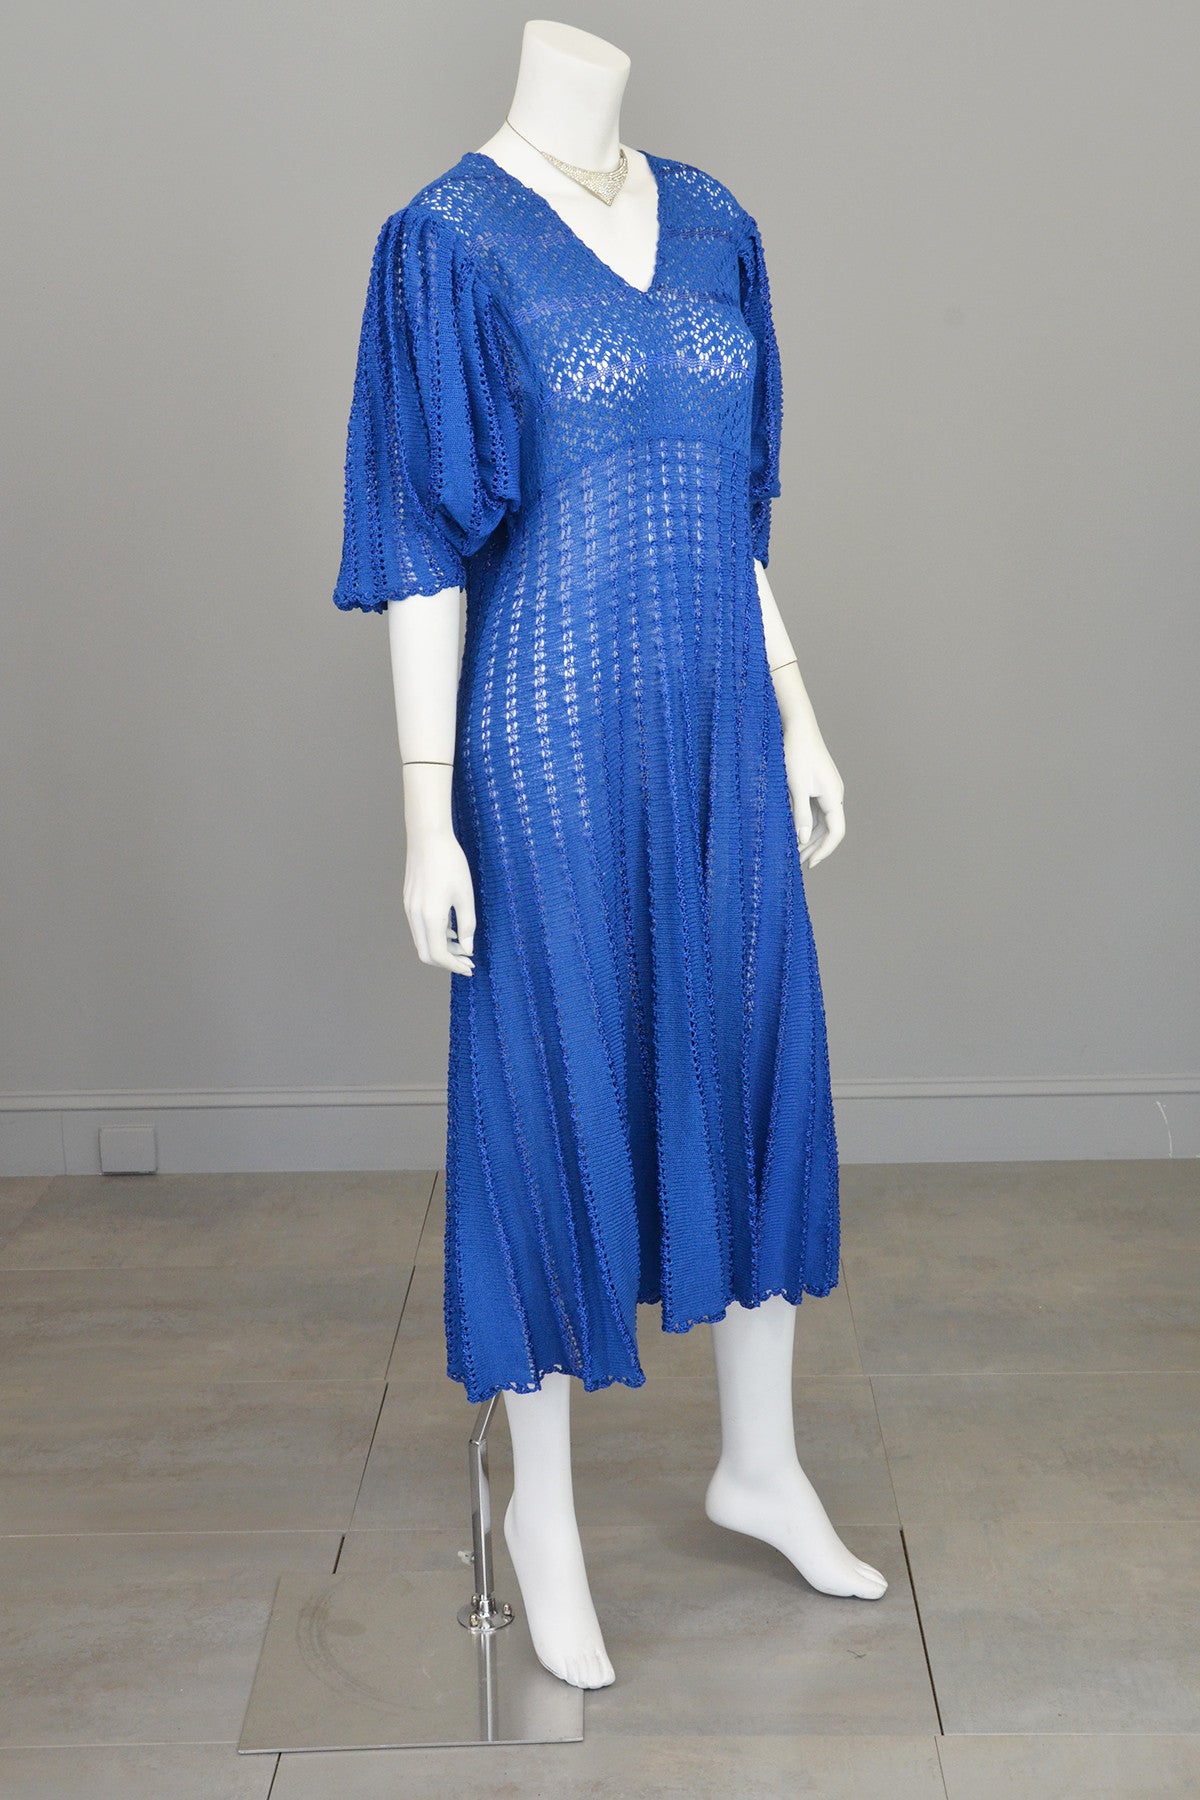 1970s Vibrant Blue Knit Crochet Dress Draping Angel Sleeves